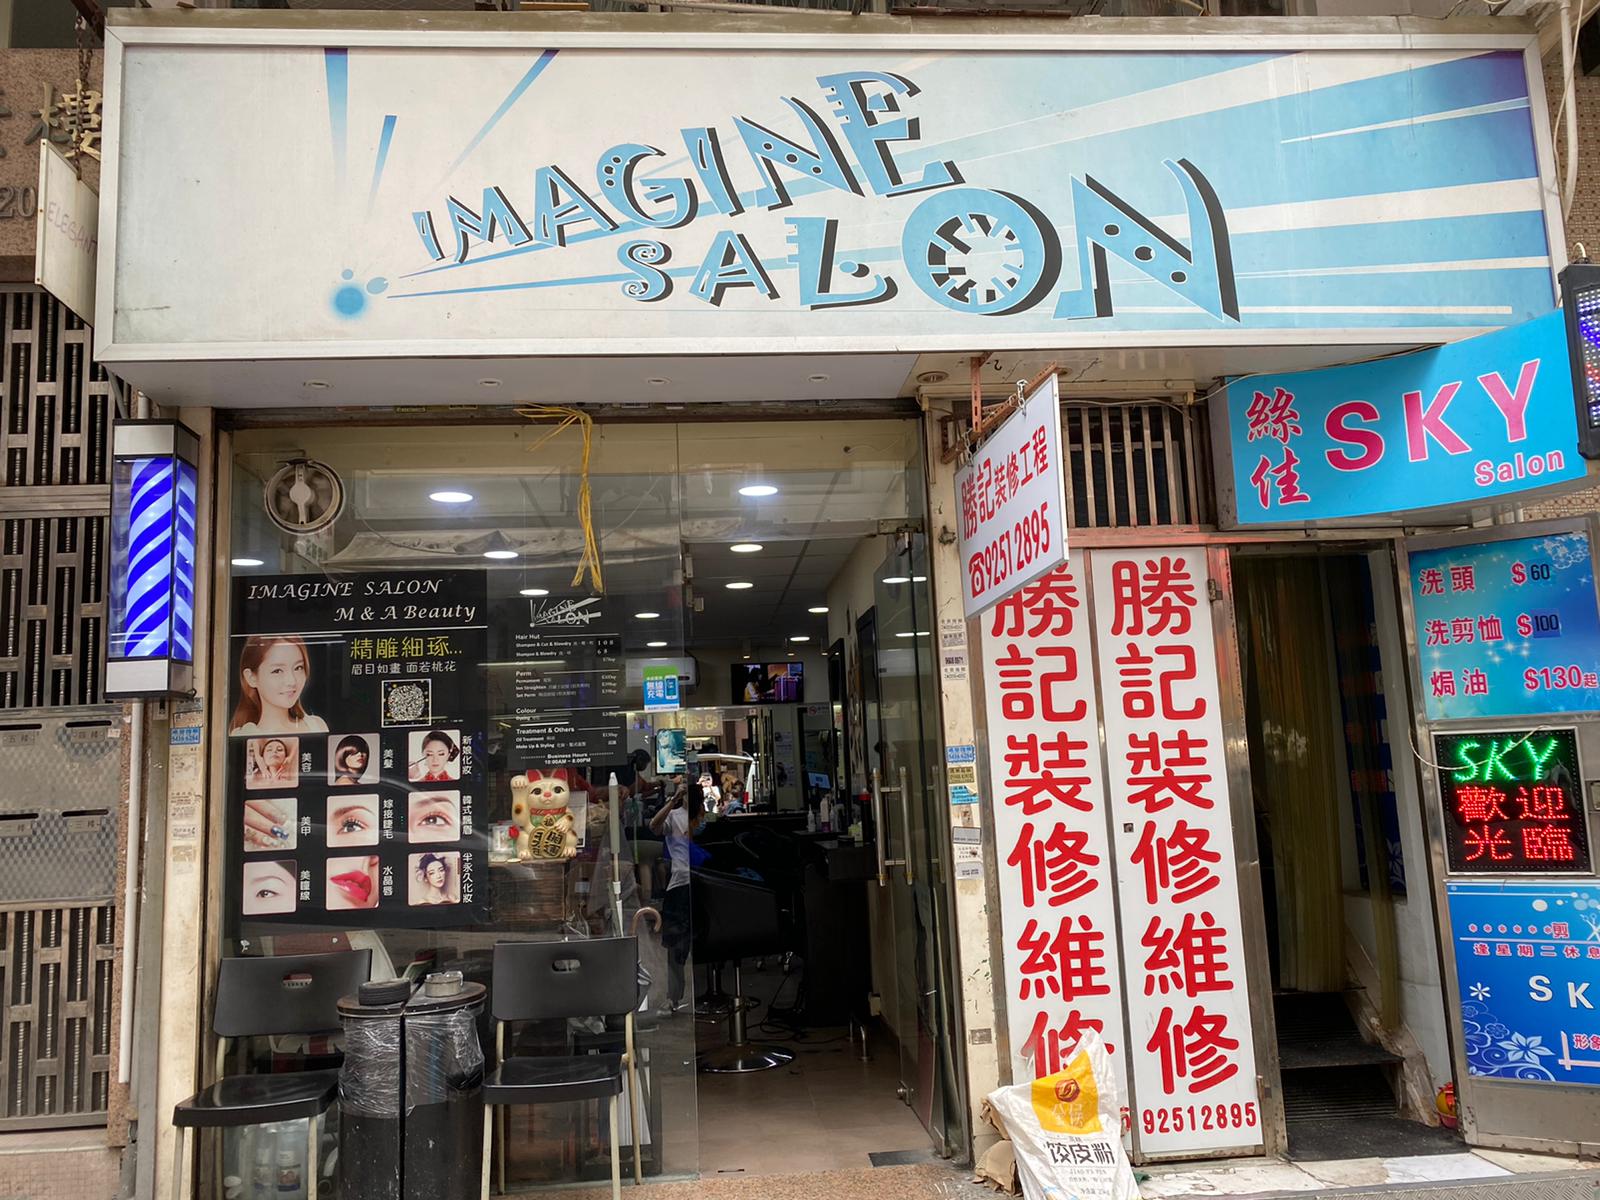 Imagine Salon